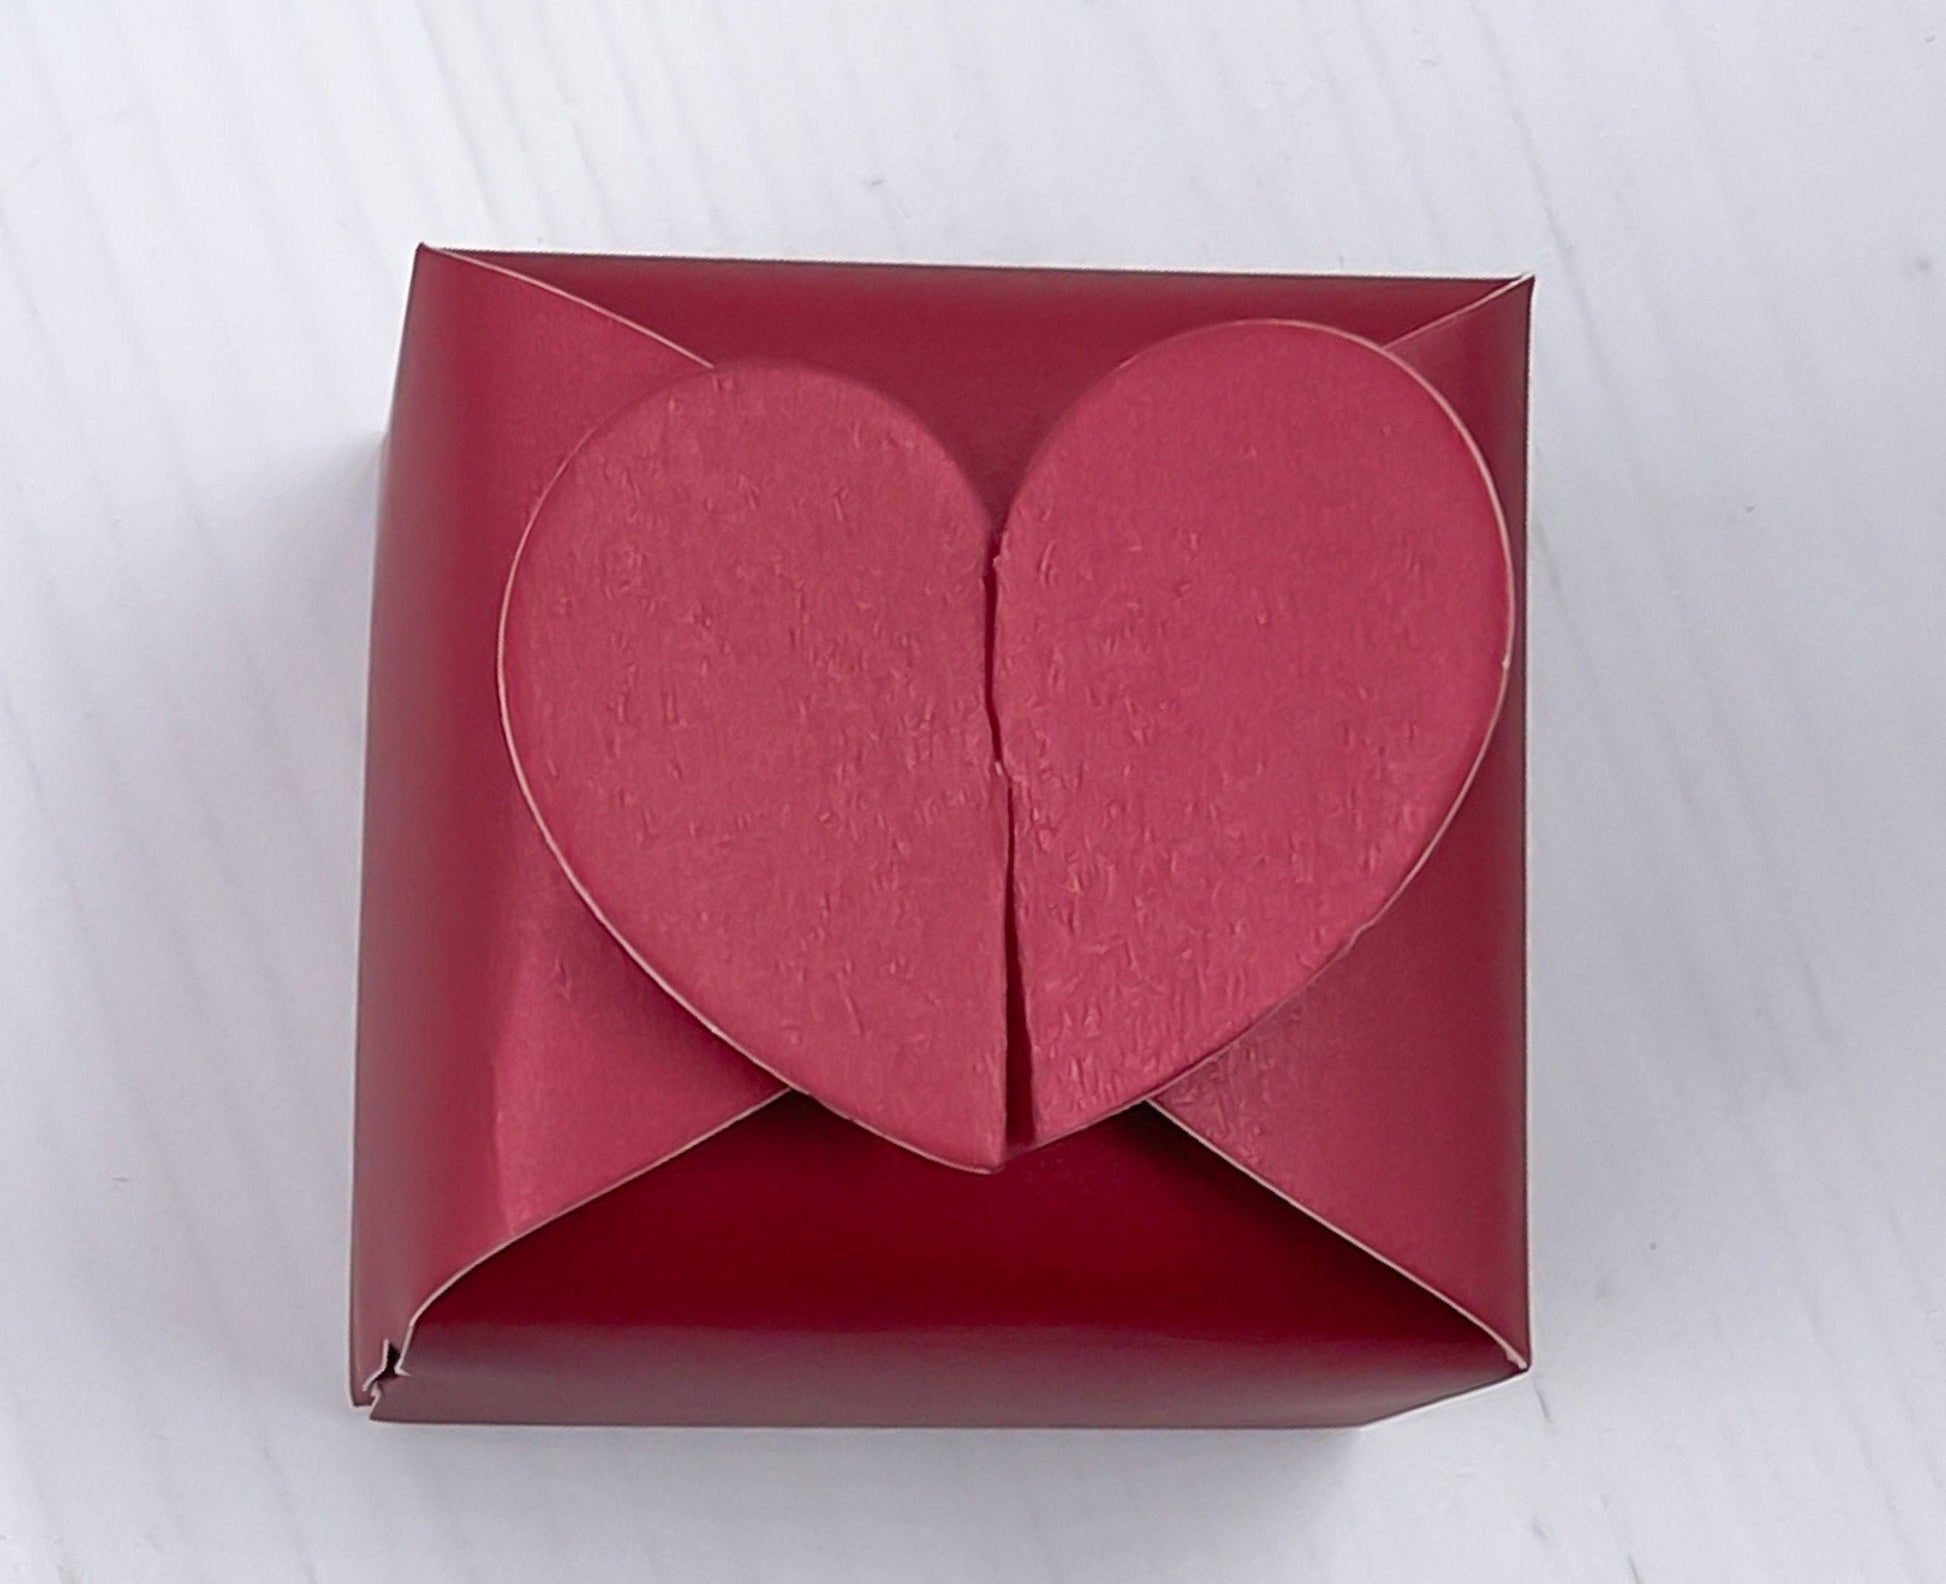 Mini Crystal Heart Valentine Gift Set